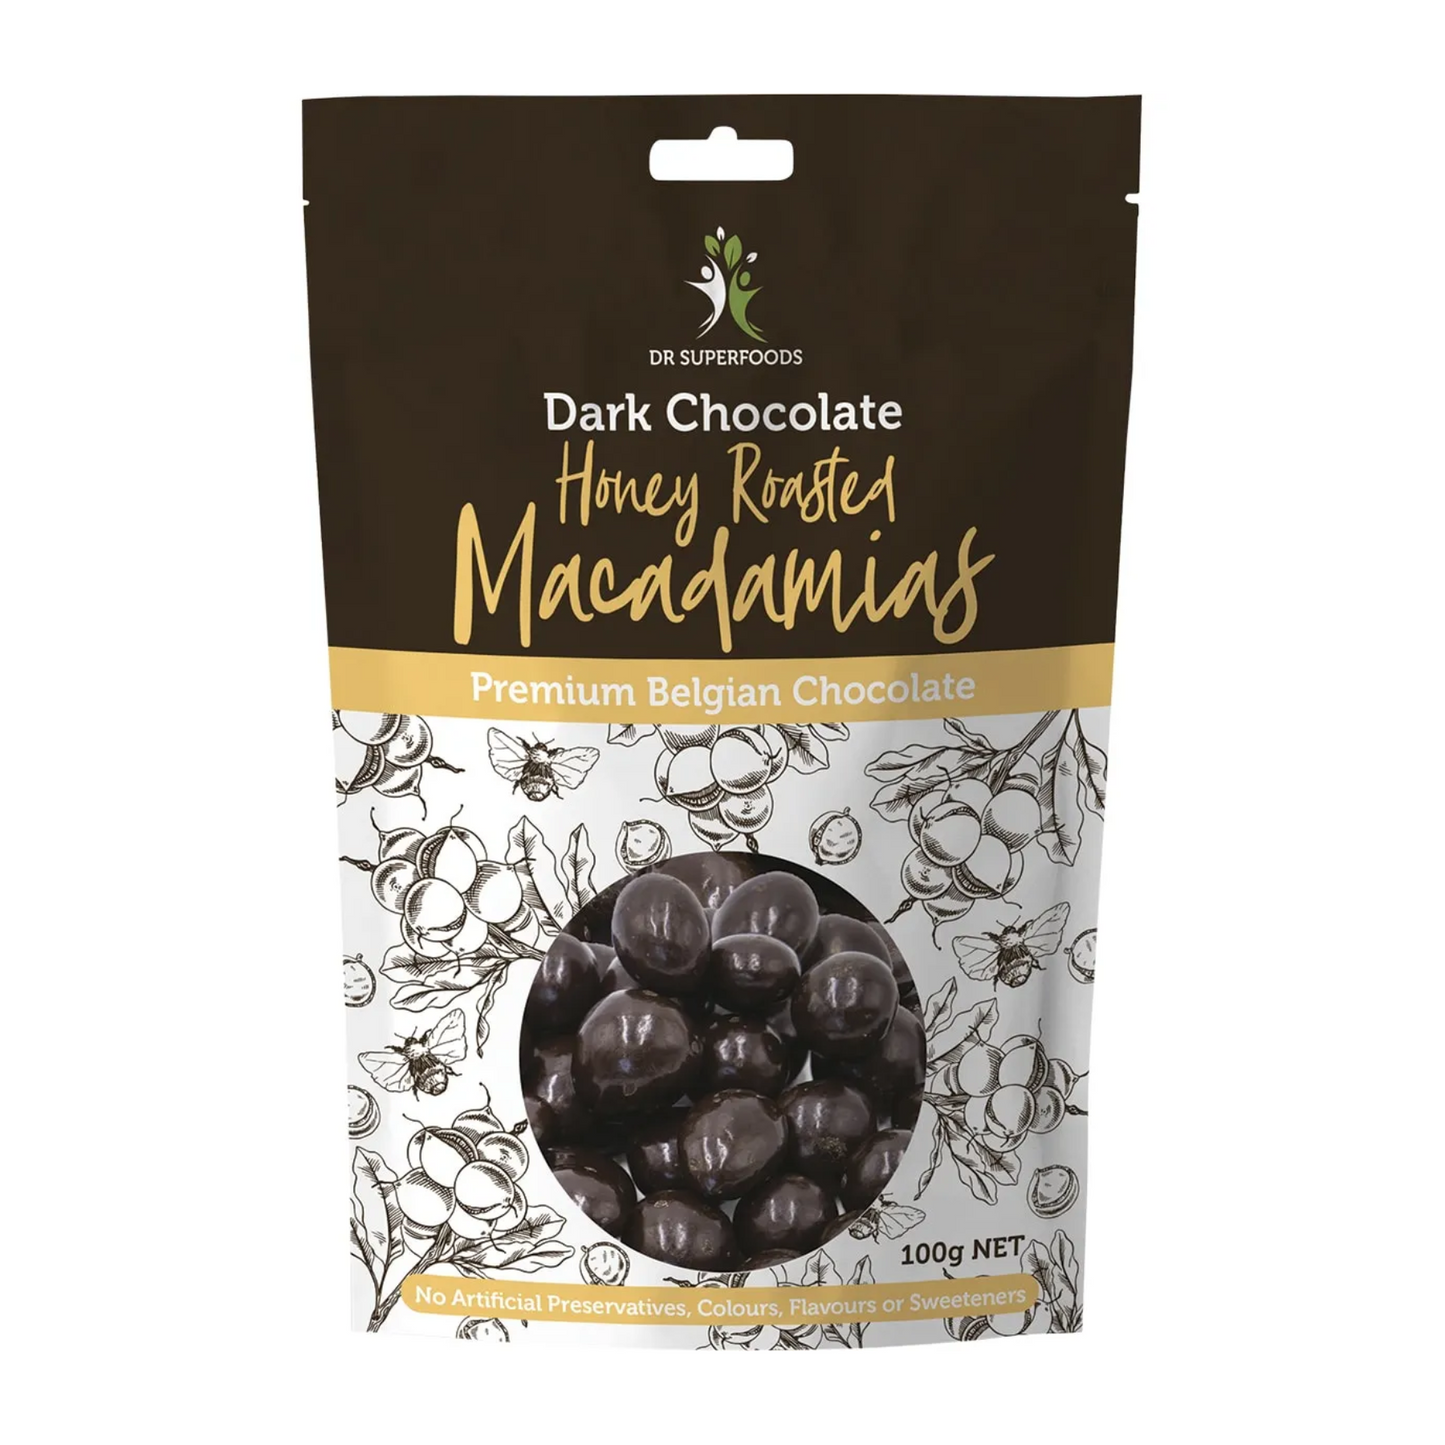 Dr Superfoods Honey Roasted Macadamias Dark Chocolate 100g, Premium Belgian Chocolate